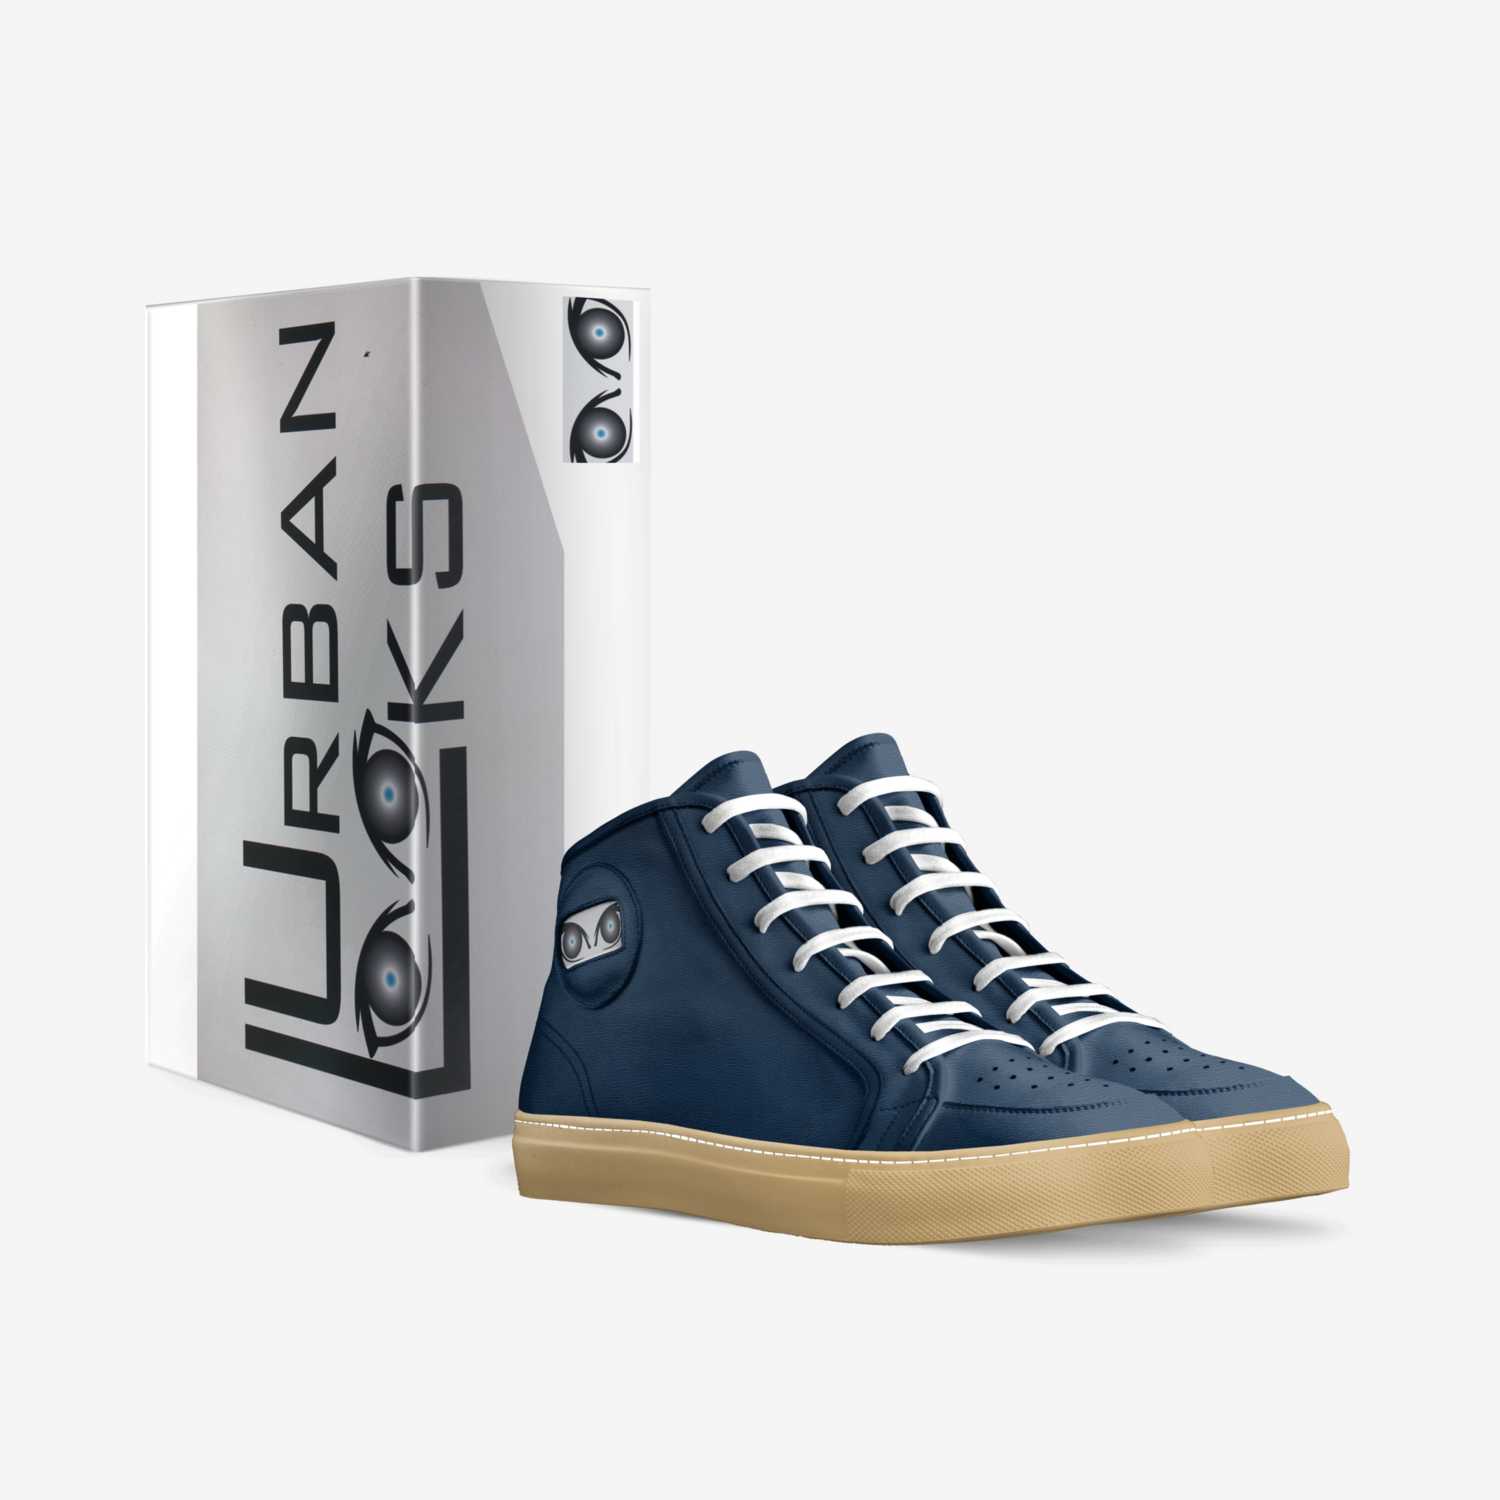 Urbanlookz  custom made in Italy shoes by Devlin Alexander | Box view